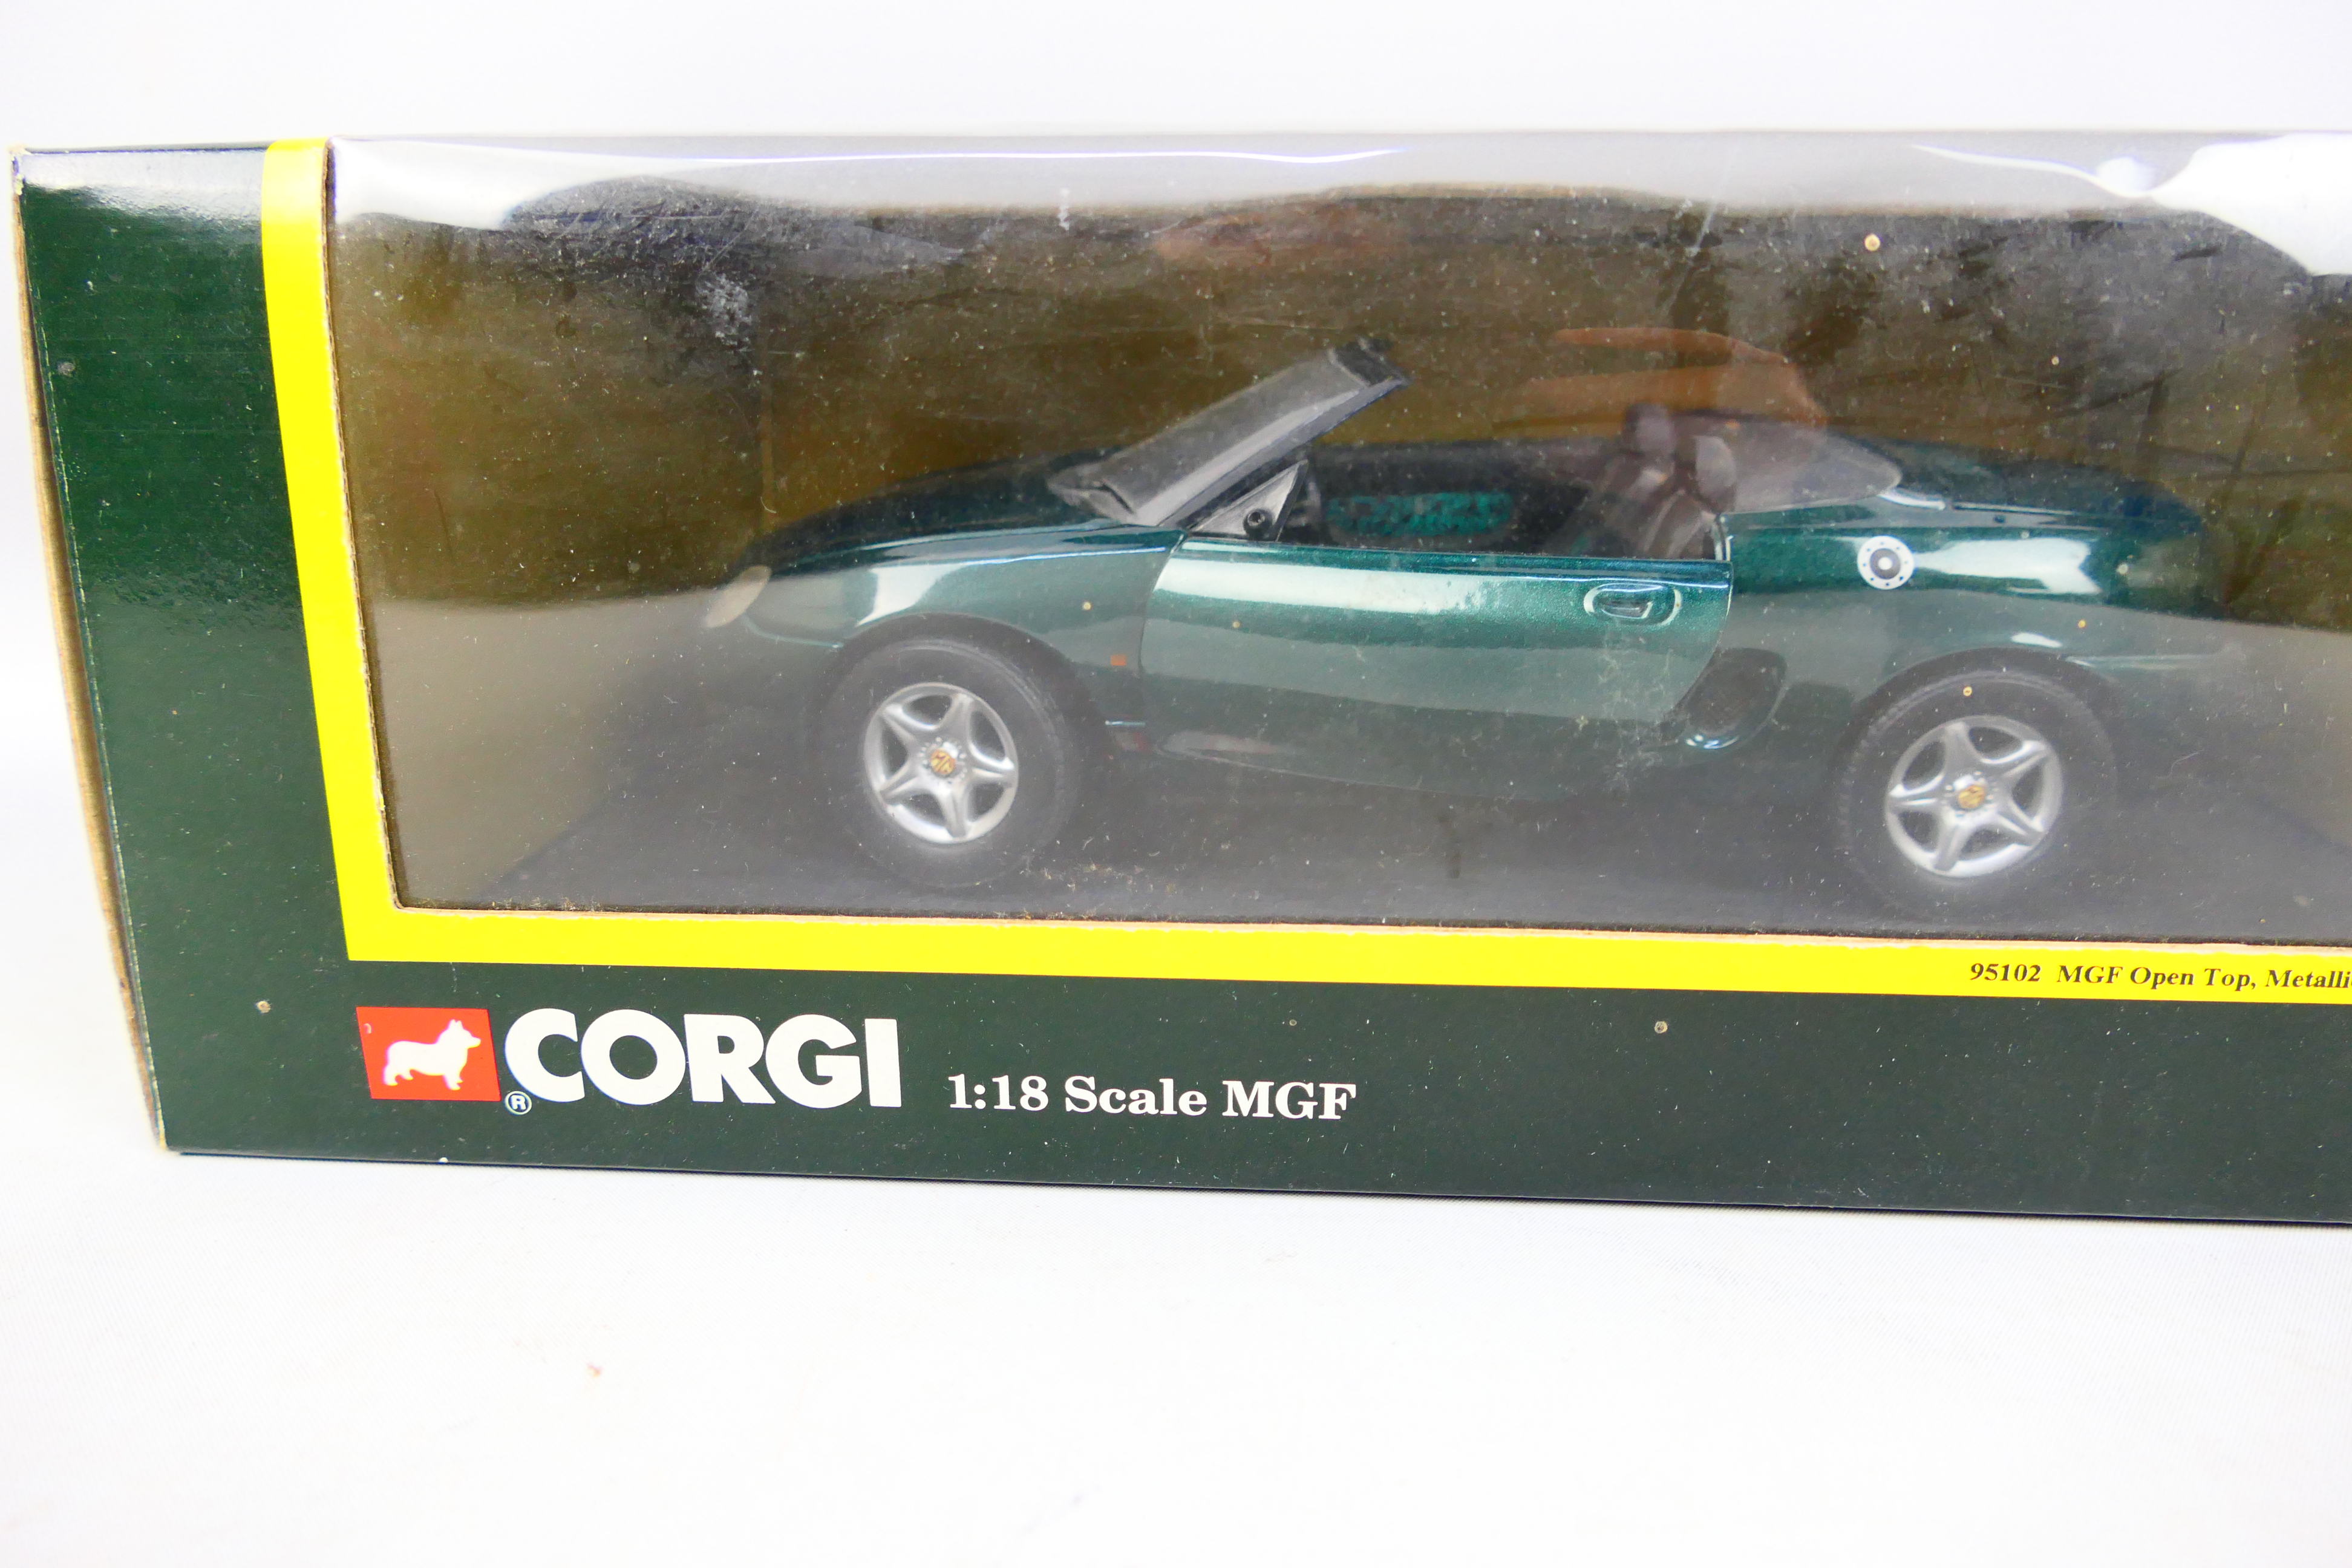 Corgi - Two boxed 1:18 scale diecast MG models. Lot consists of Corgi #95102 MGF 1. - Image 4 of 5